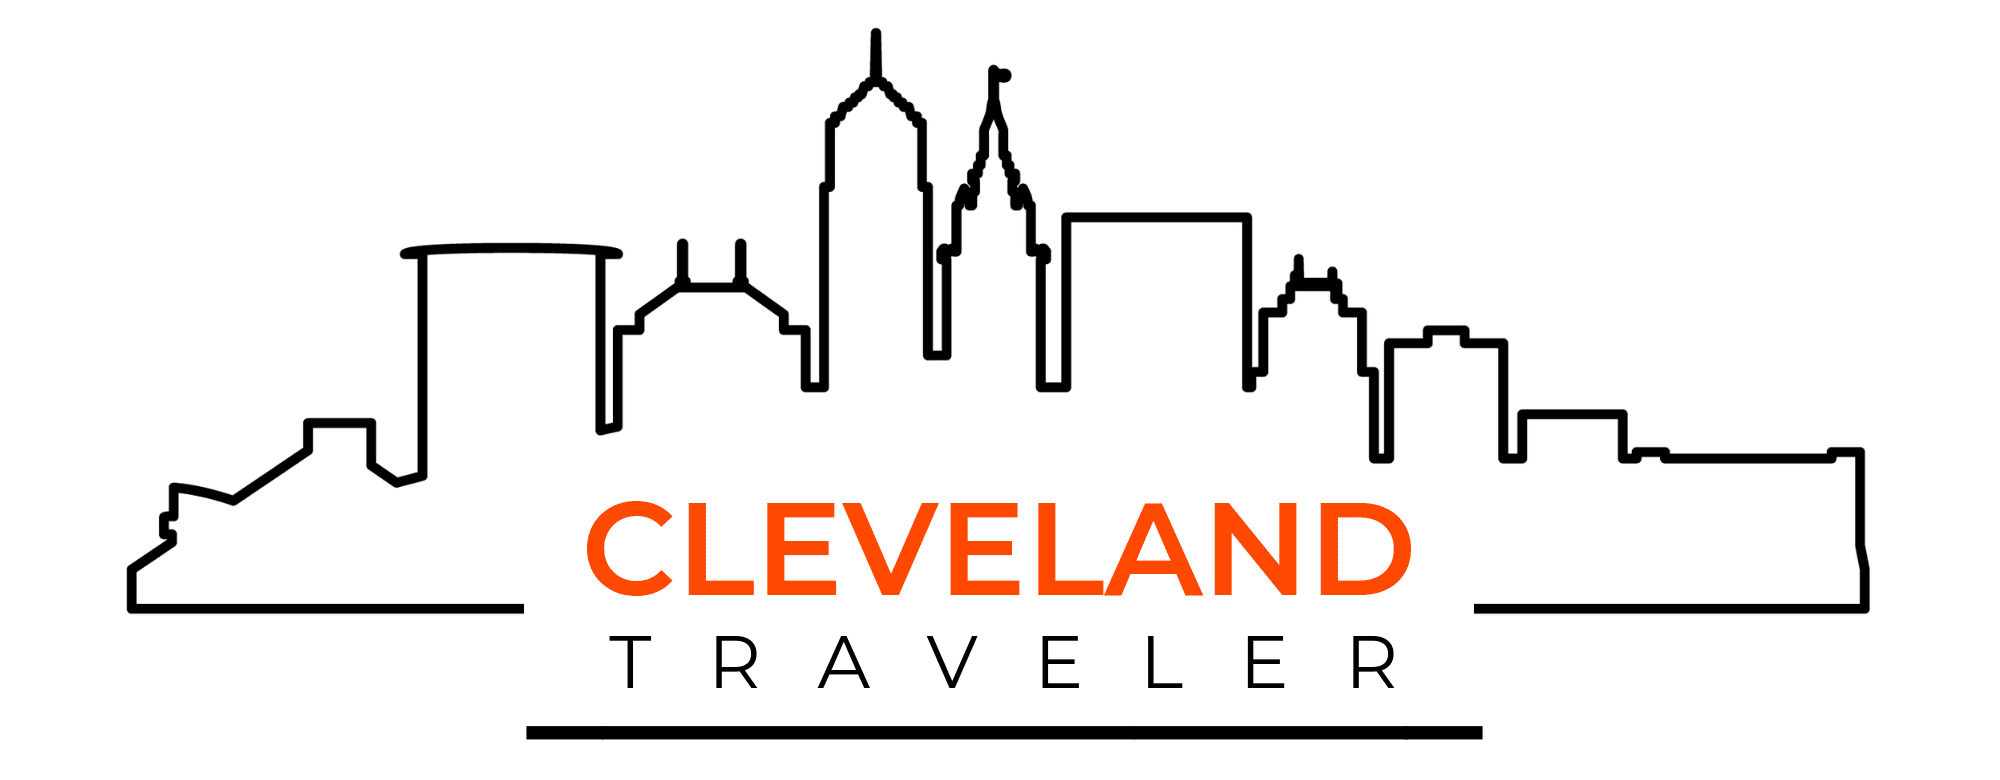 The Cleveland Traveler